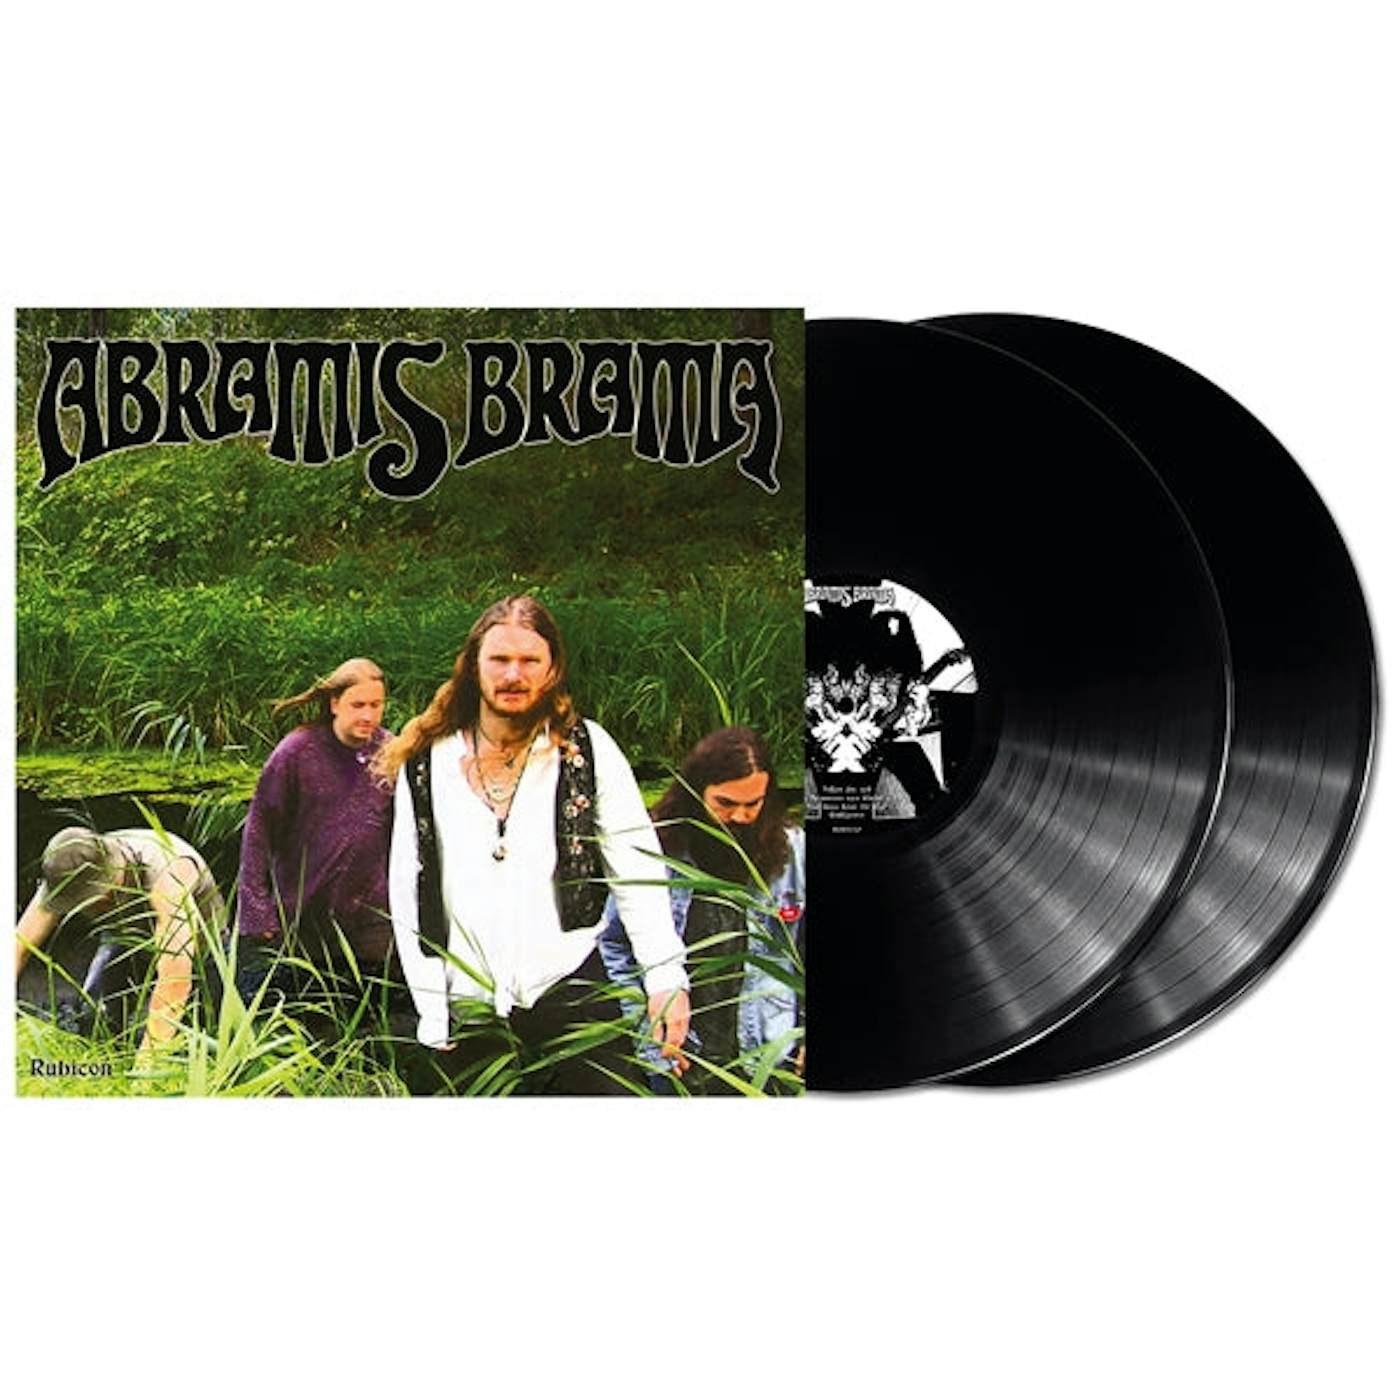 Abramis Brama LP - Rubicon (Vinyl)